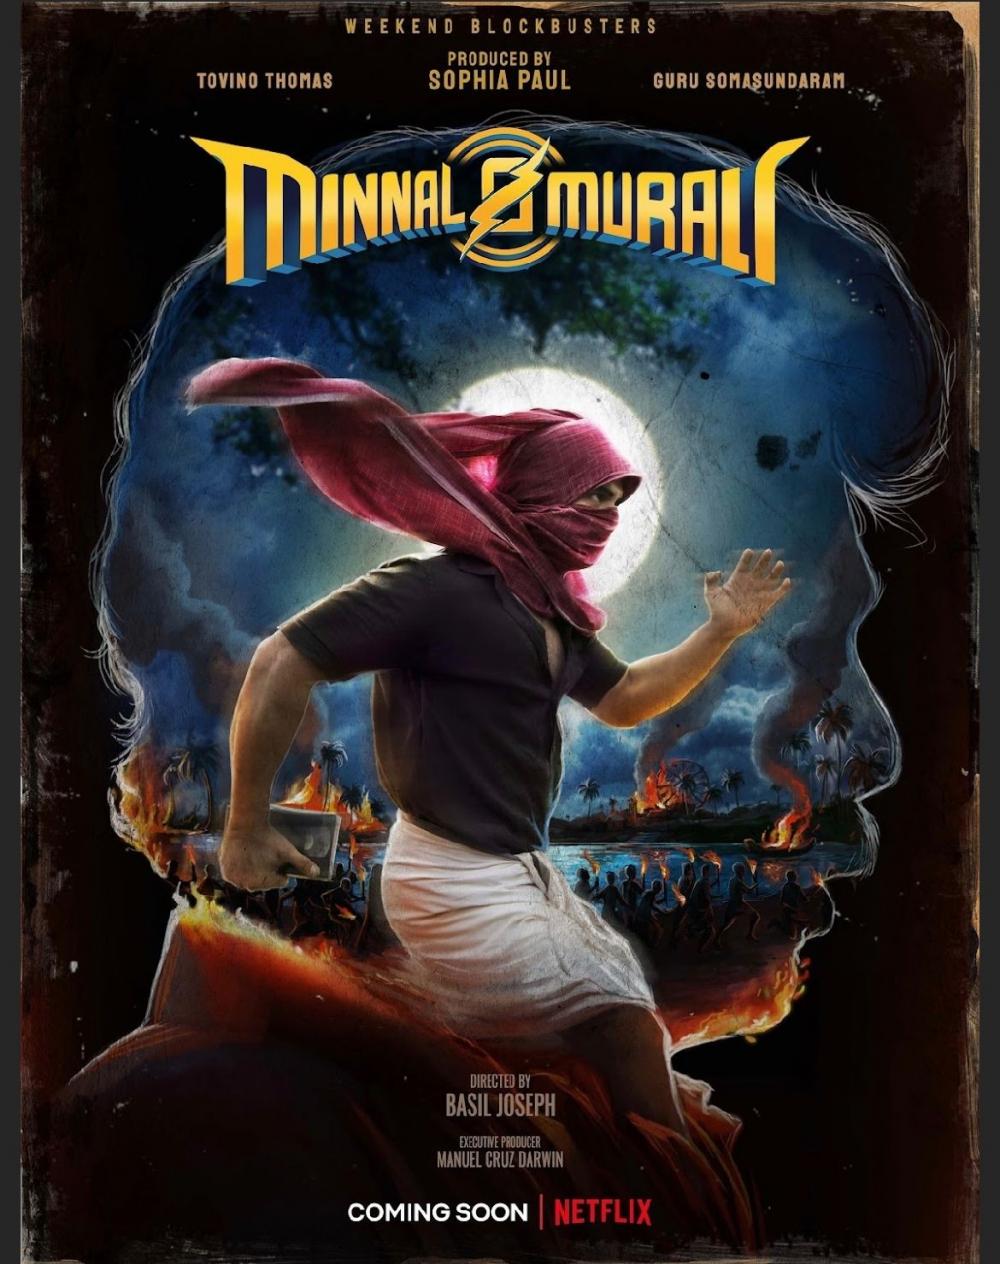 The Weekend Leader - Tovino Thomas to play superhero in Netflix film 'Minnal Murali'